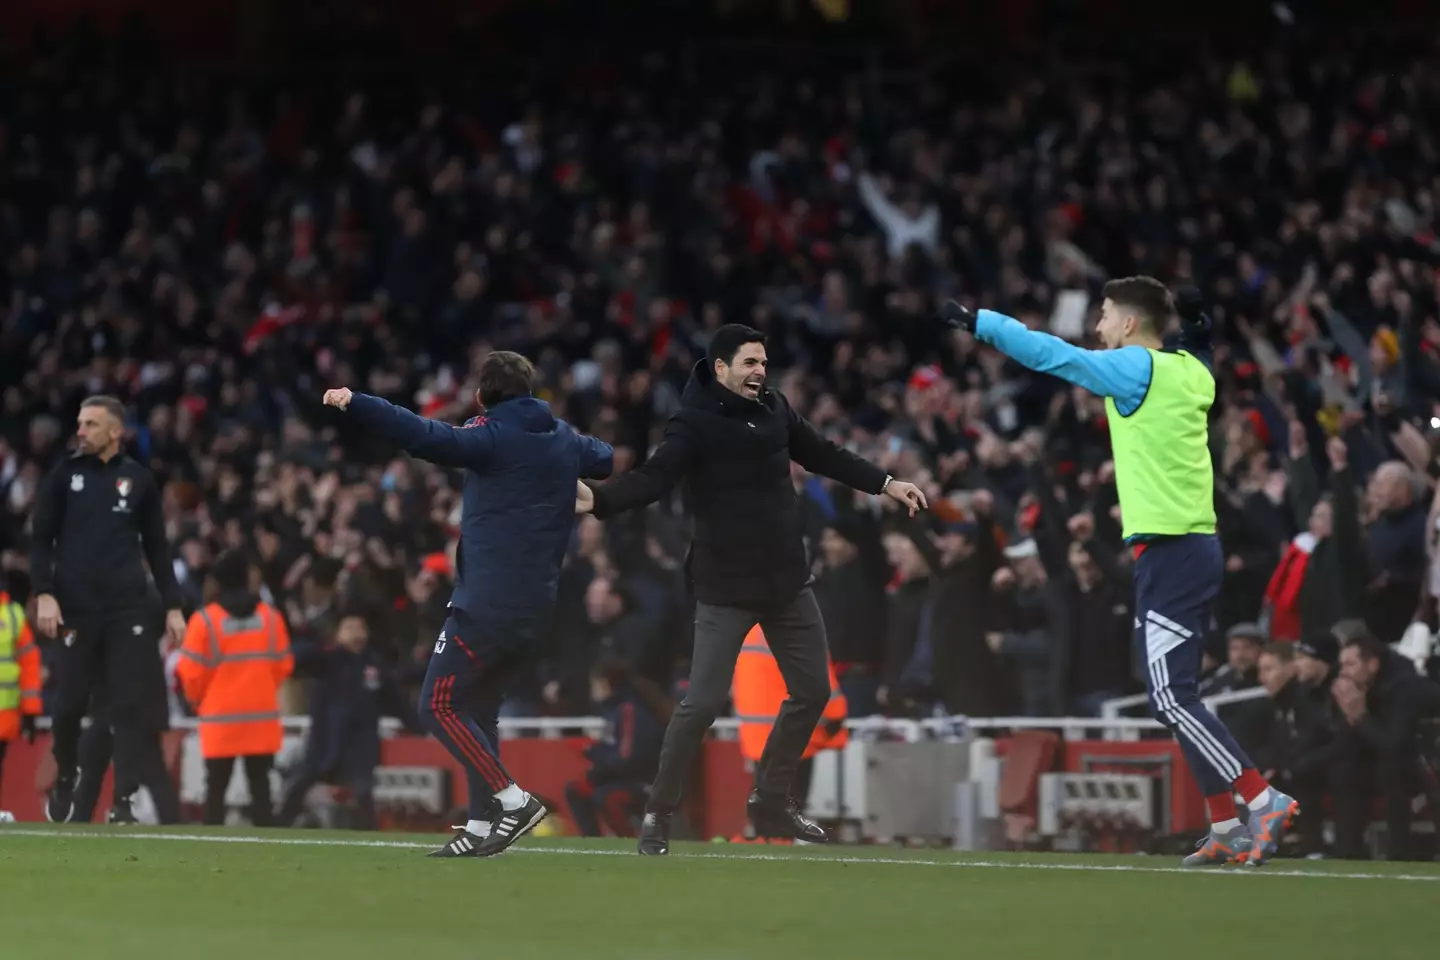 Arsenal's late winner vs Bournemouth sparked wild celebrations. (